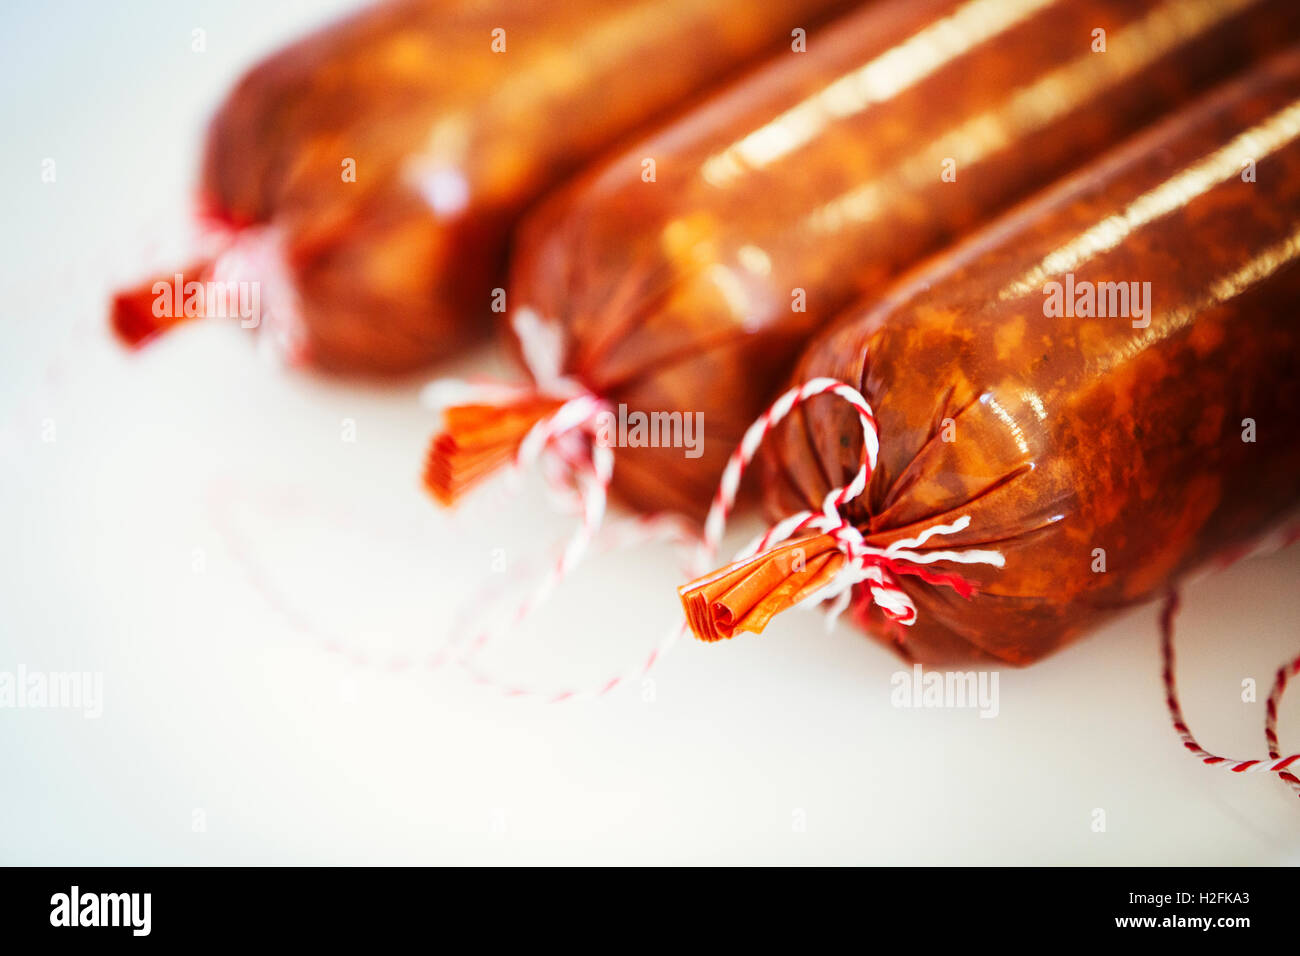 Close up of three Chorizo sausages. Stock Photo